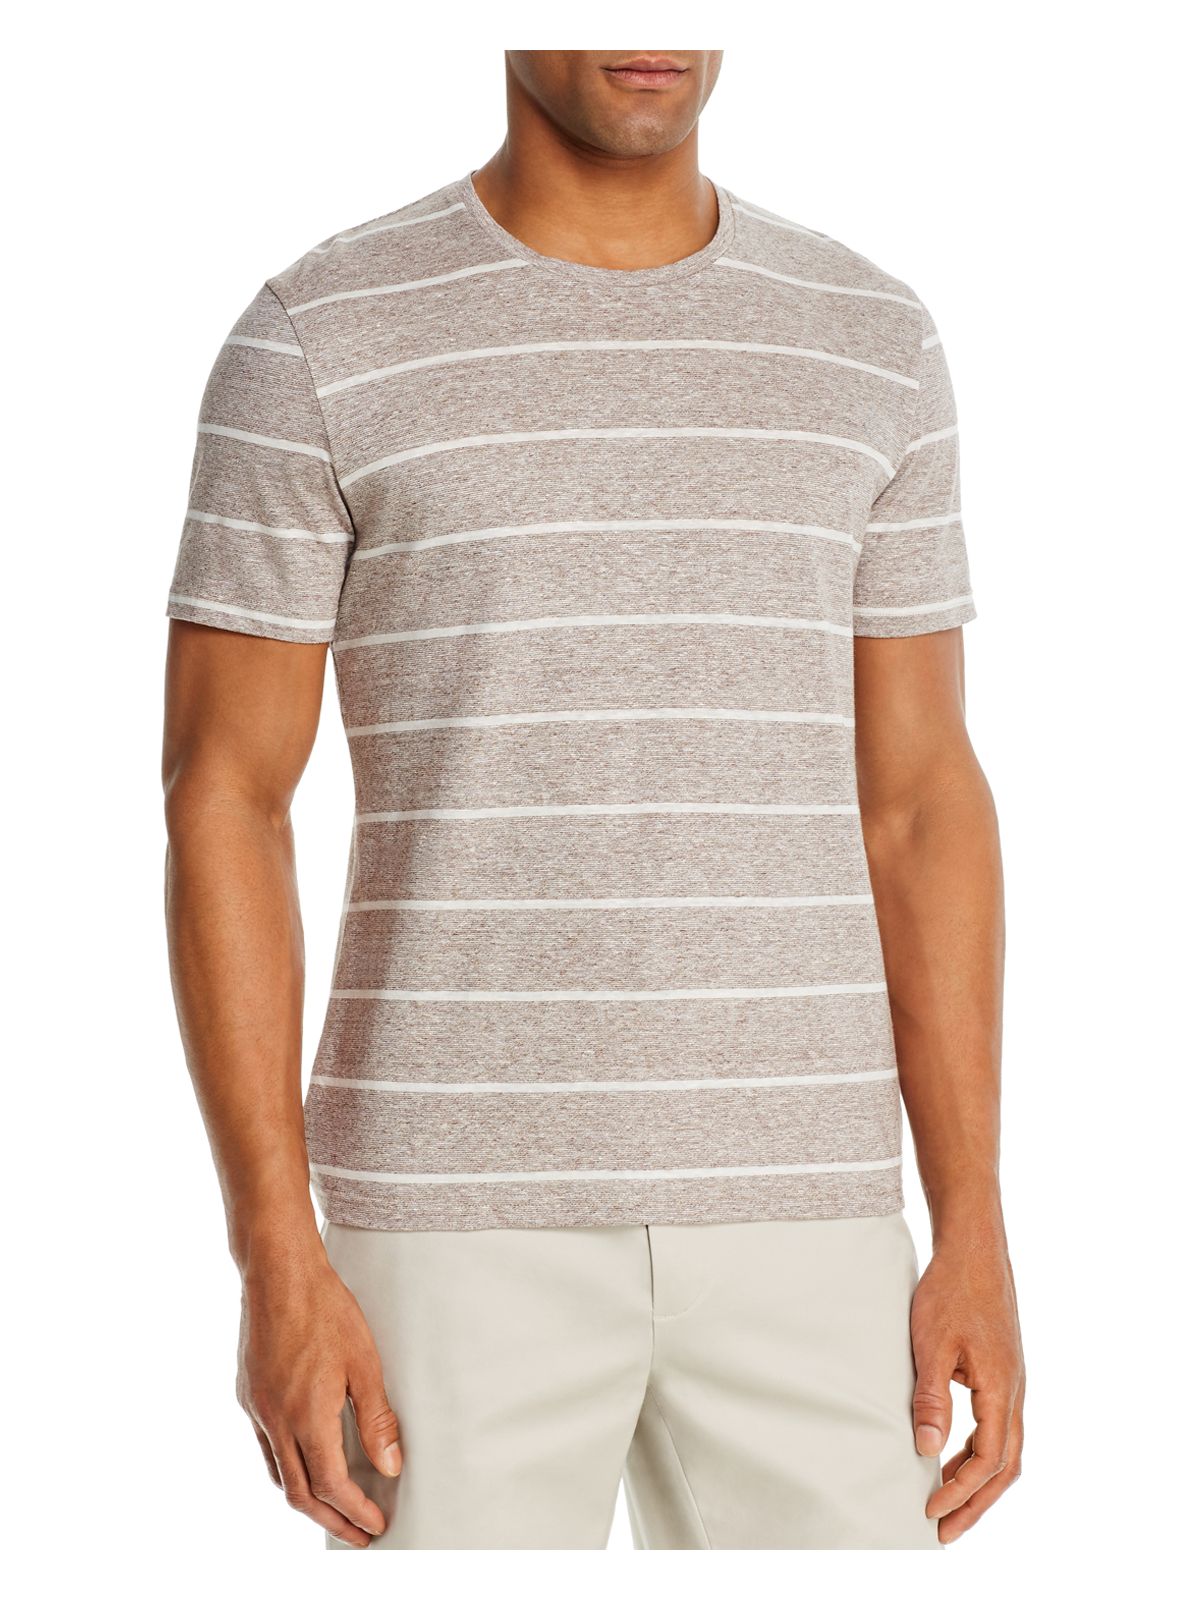 DYLAN GRAY Mens Brown Striped Short Sleeve Casual Shirt XL